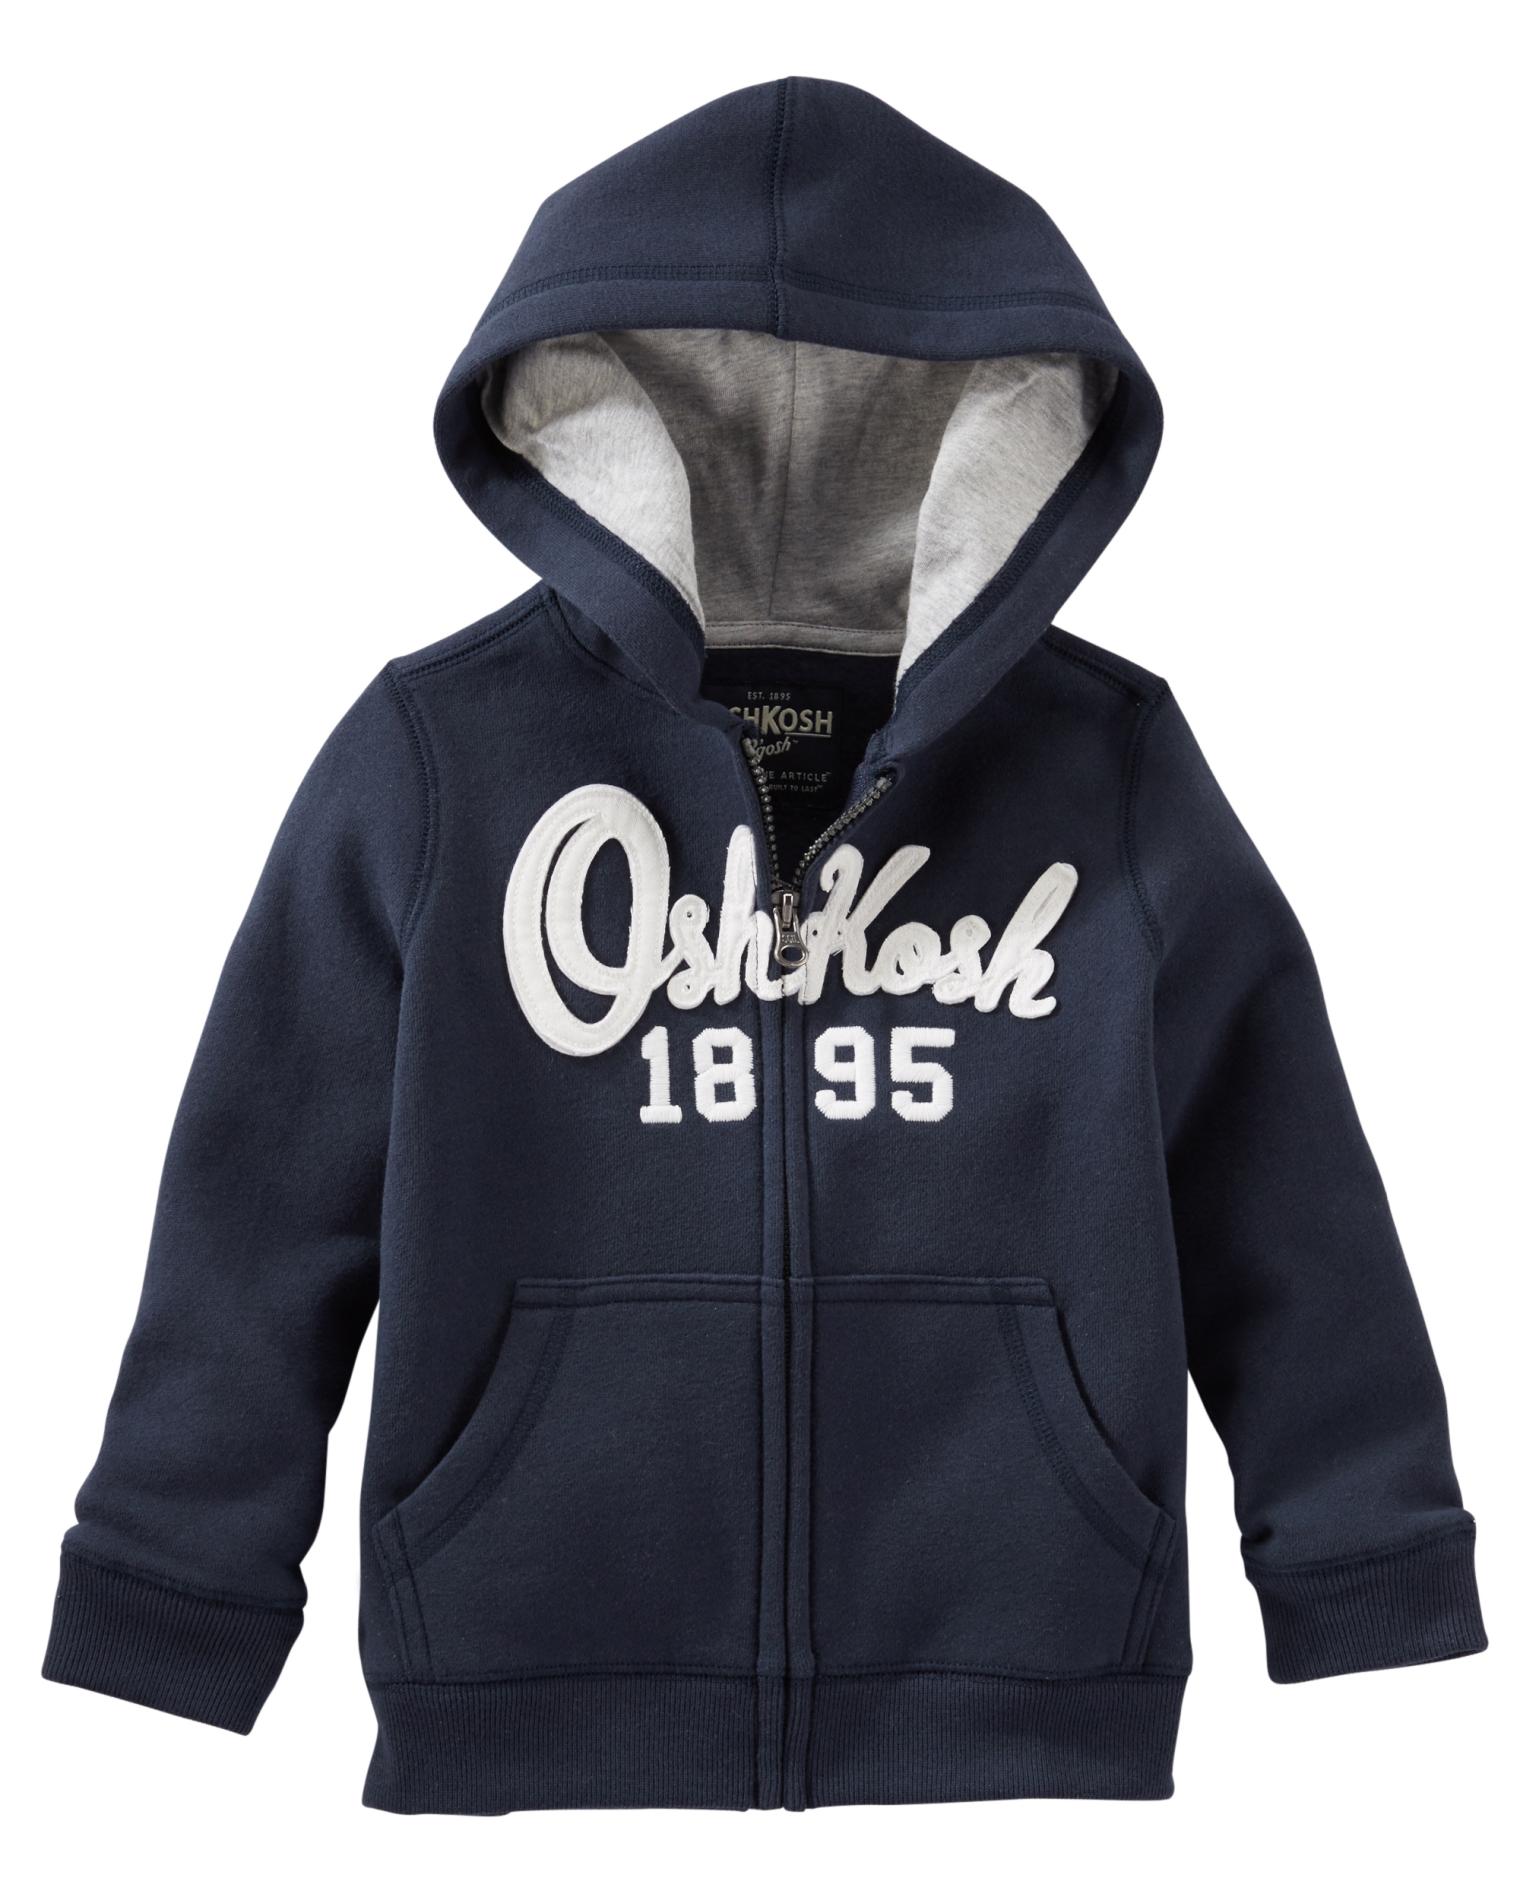 OshKosh Newborn, Infant & Toddler Boys' Hoodie Jacket